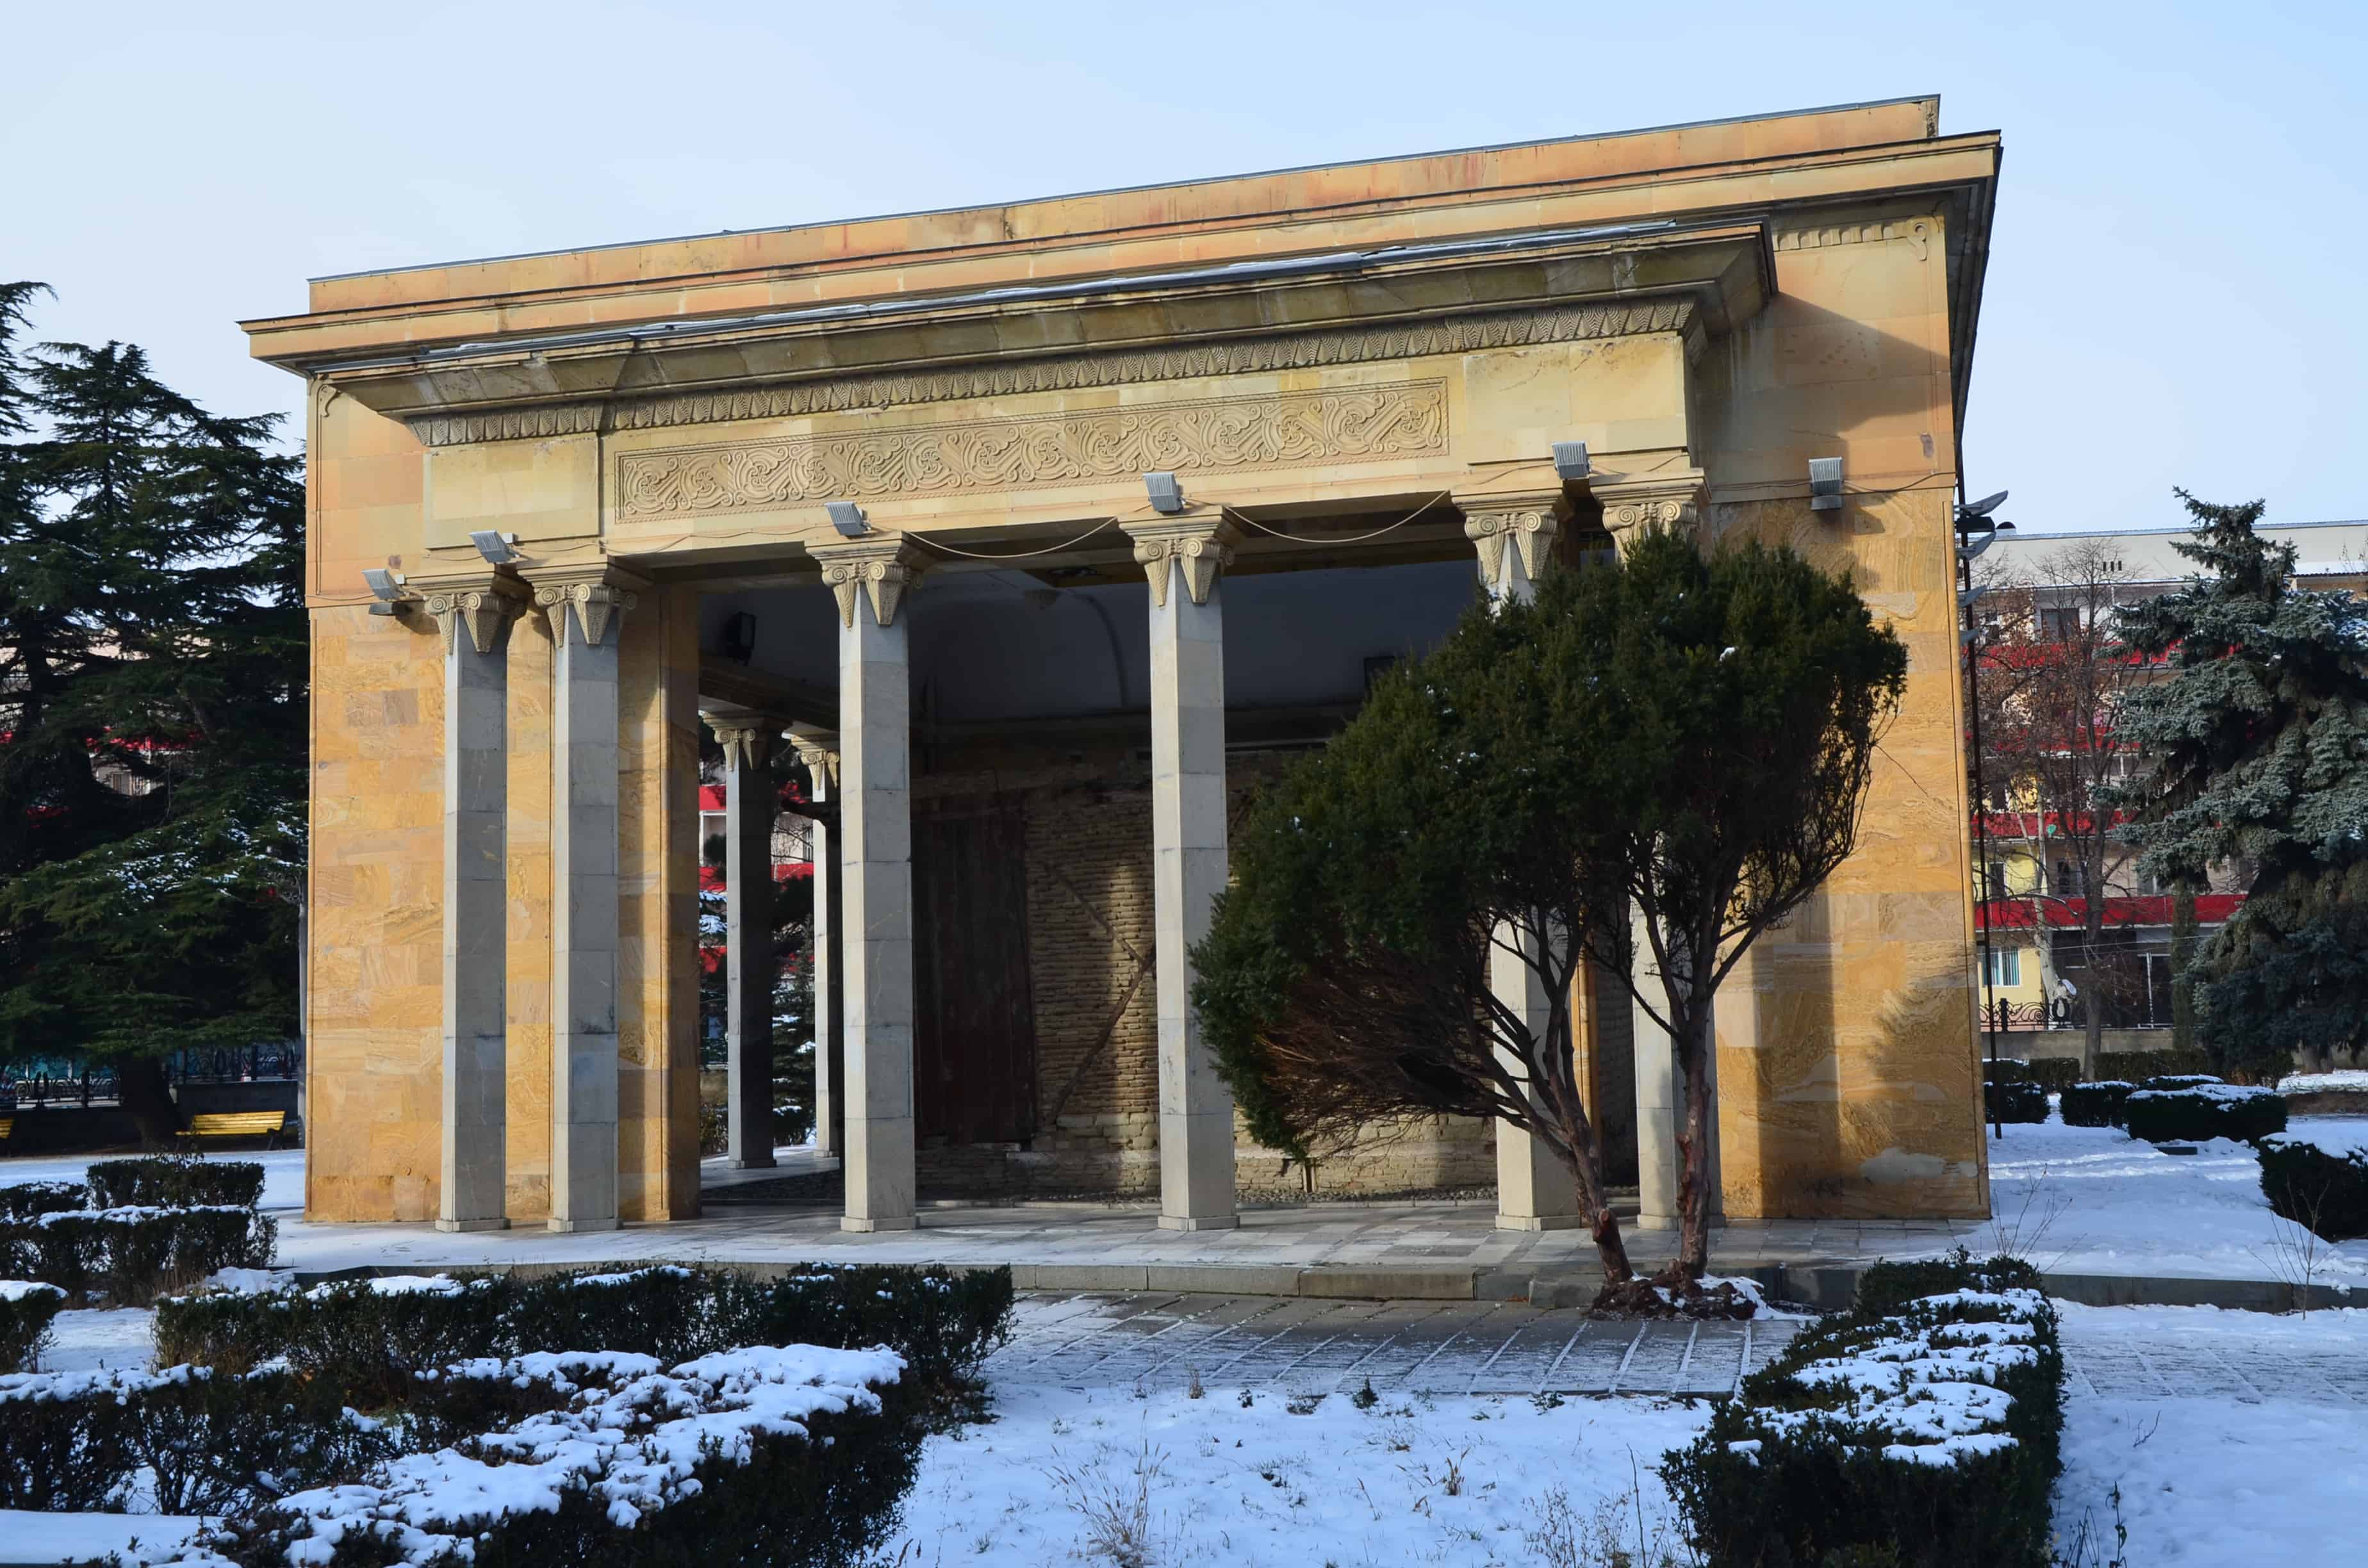 Stalin's birth home at the Joseph Stalin Museum in Gori, Georgia